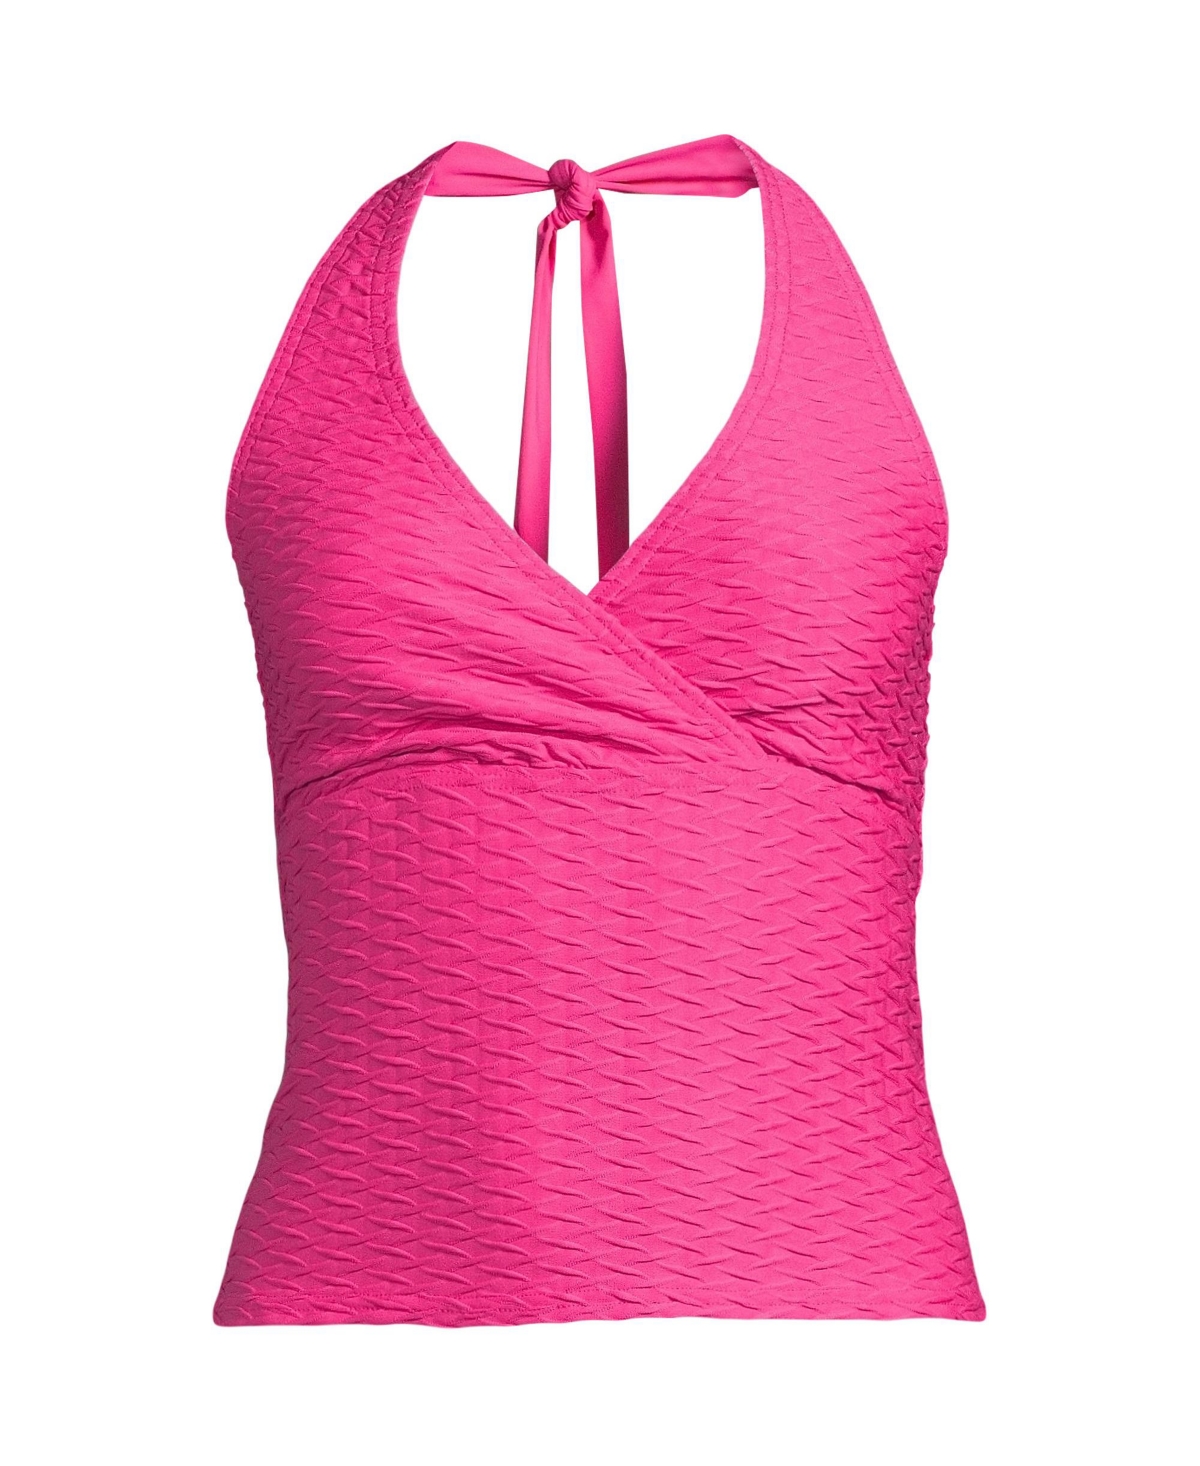 Women's Texture Halter Tankini Swimsuit Top - Prism pink